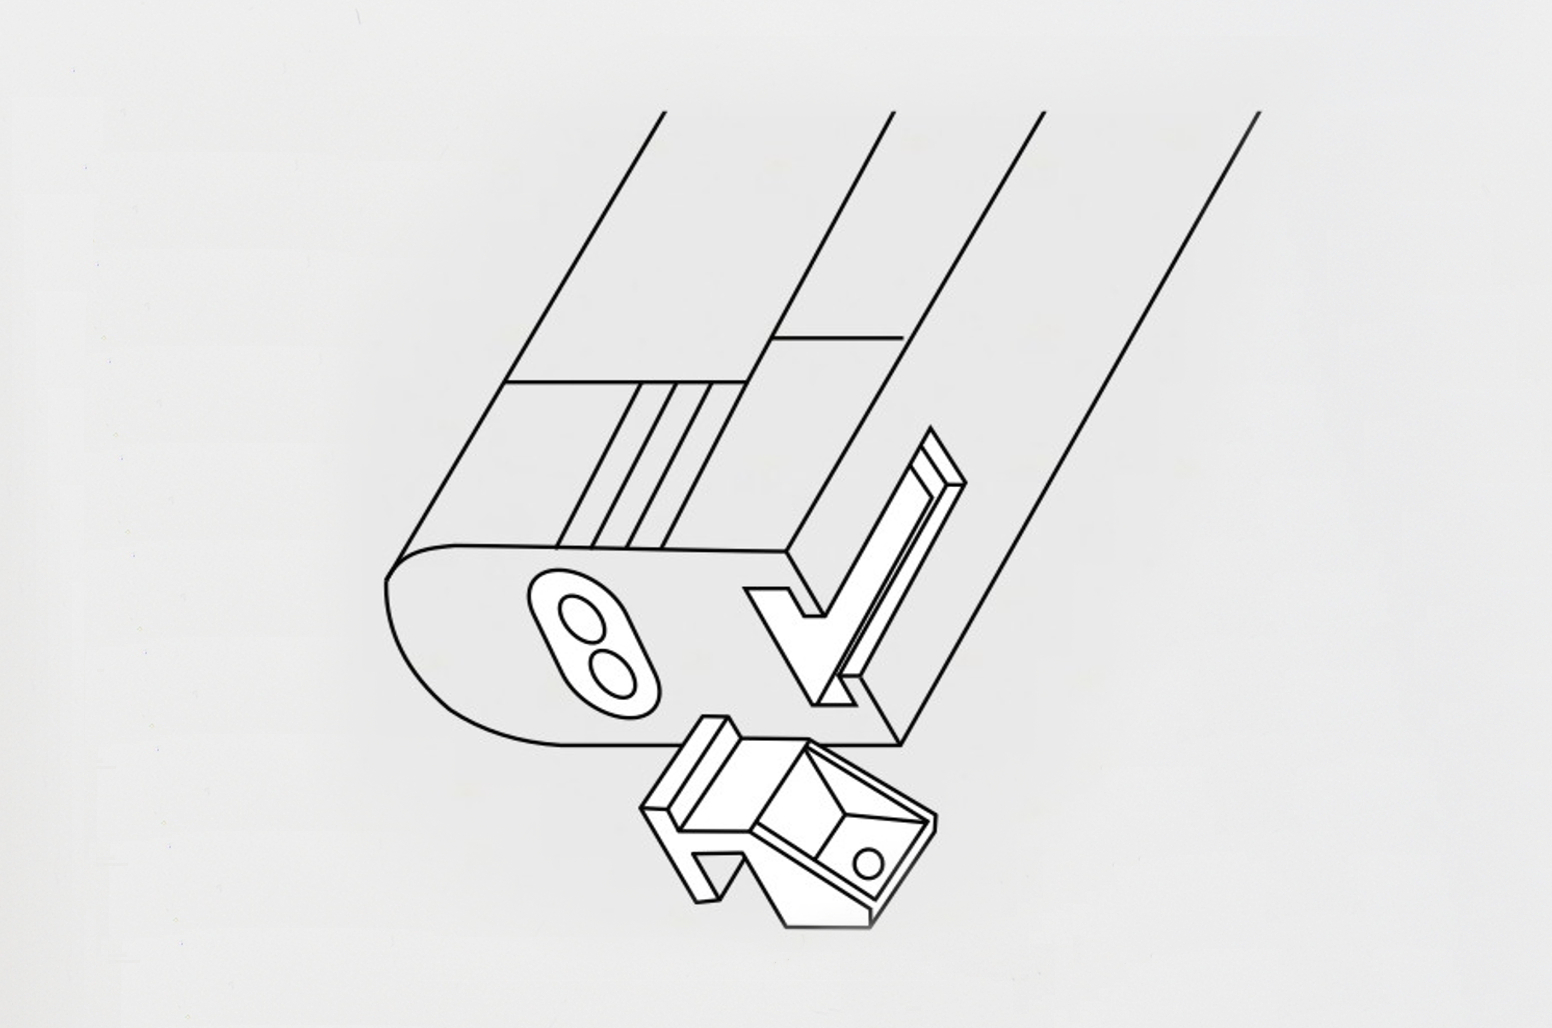 Montageclip vertikal
Fixing bracket vertical